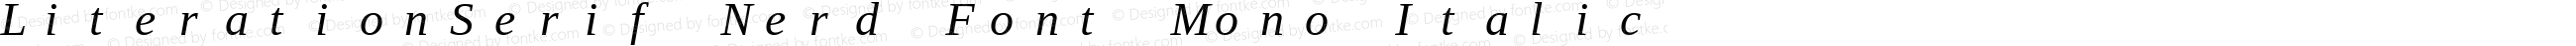 Literation Serif Italic Nerd Font Complete Mono